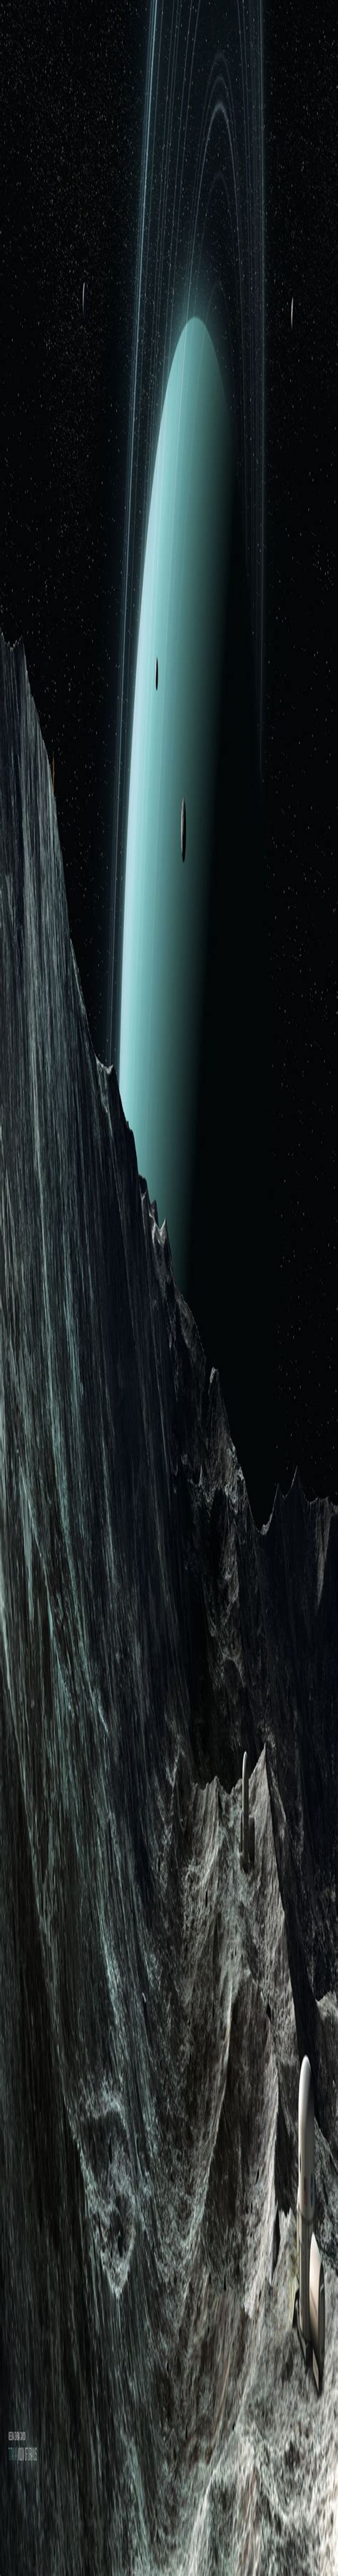 Titania Moon Of Uranus Jimmy Wallebring